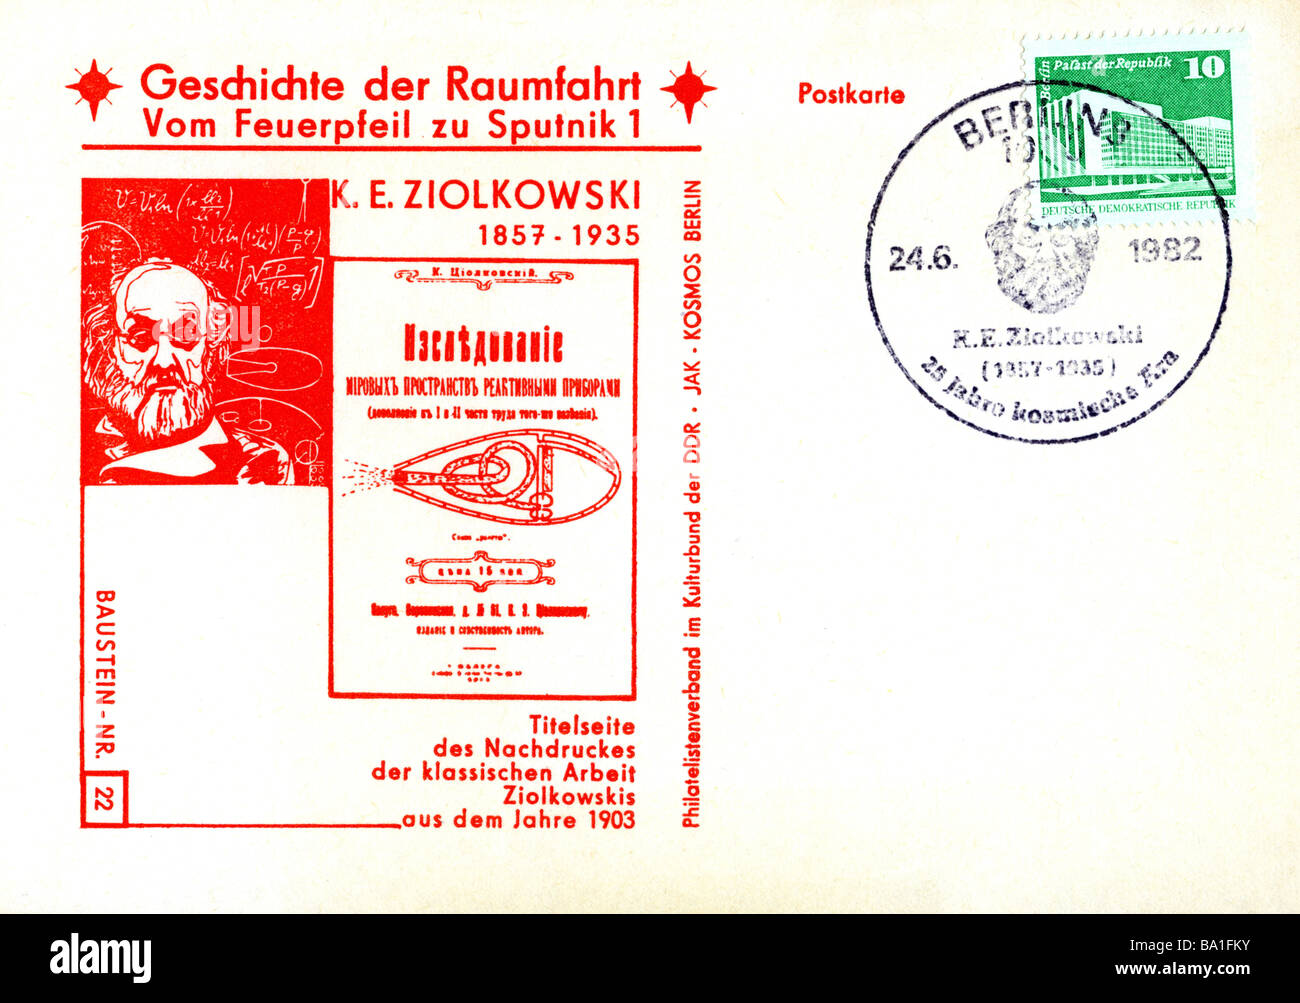 Ziolkowski, Konstantin Eduardowitsch, 17.9.1857 - 19.9.1935, Russian physician, postcard, German Democratic Republic, stamped 24 Stock Photo